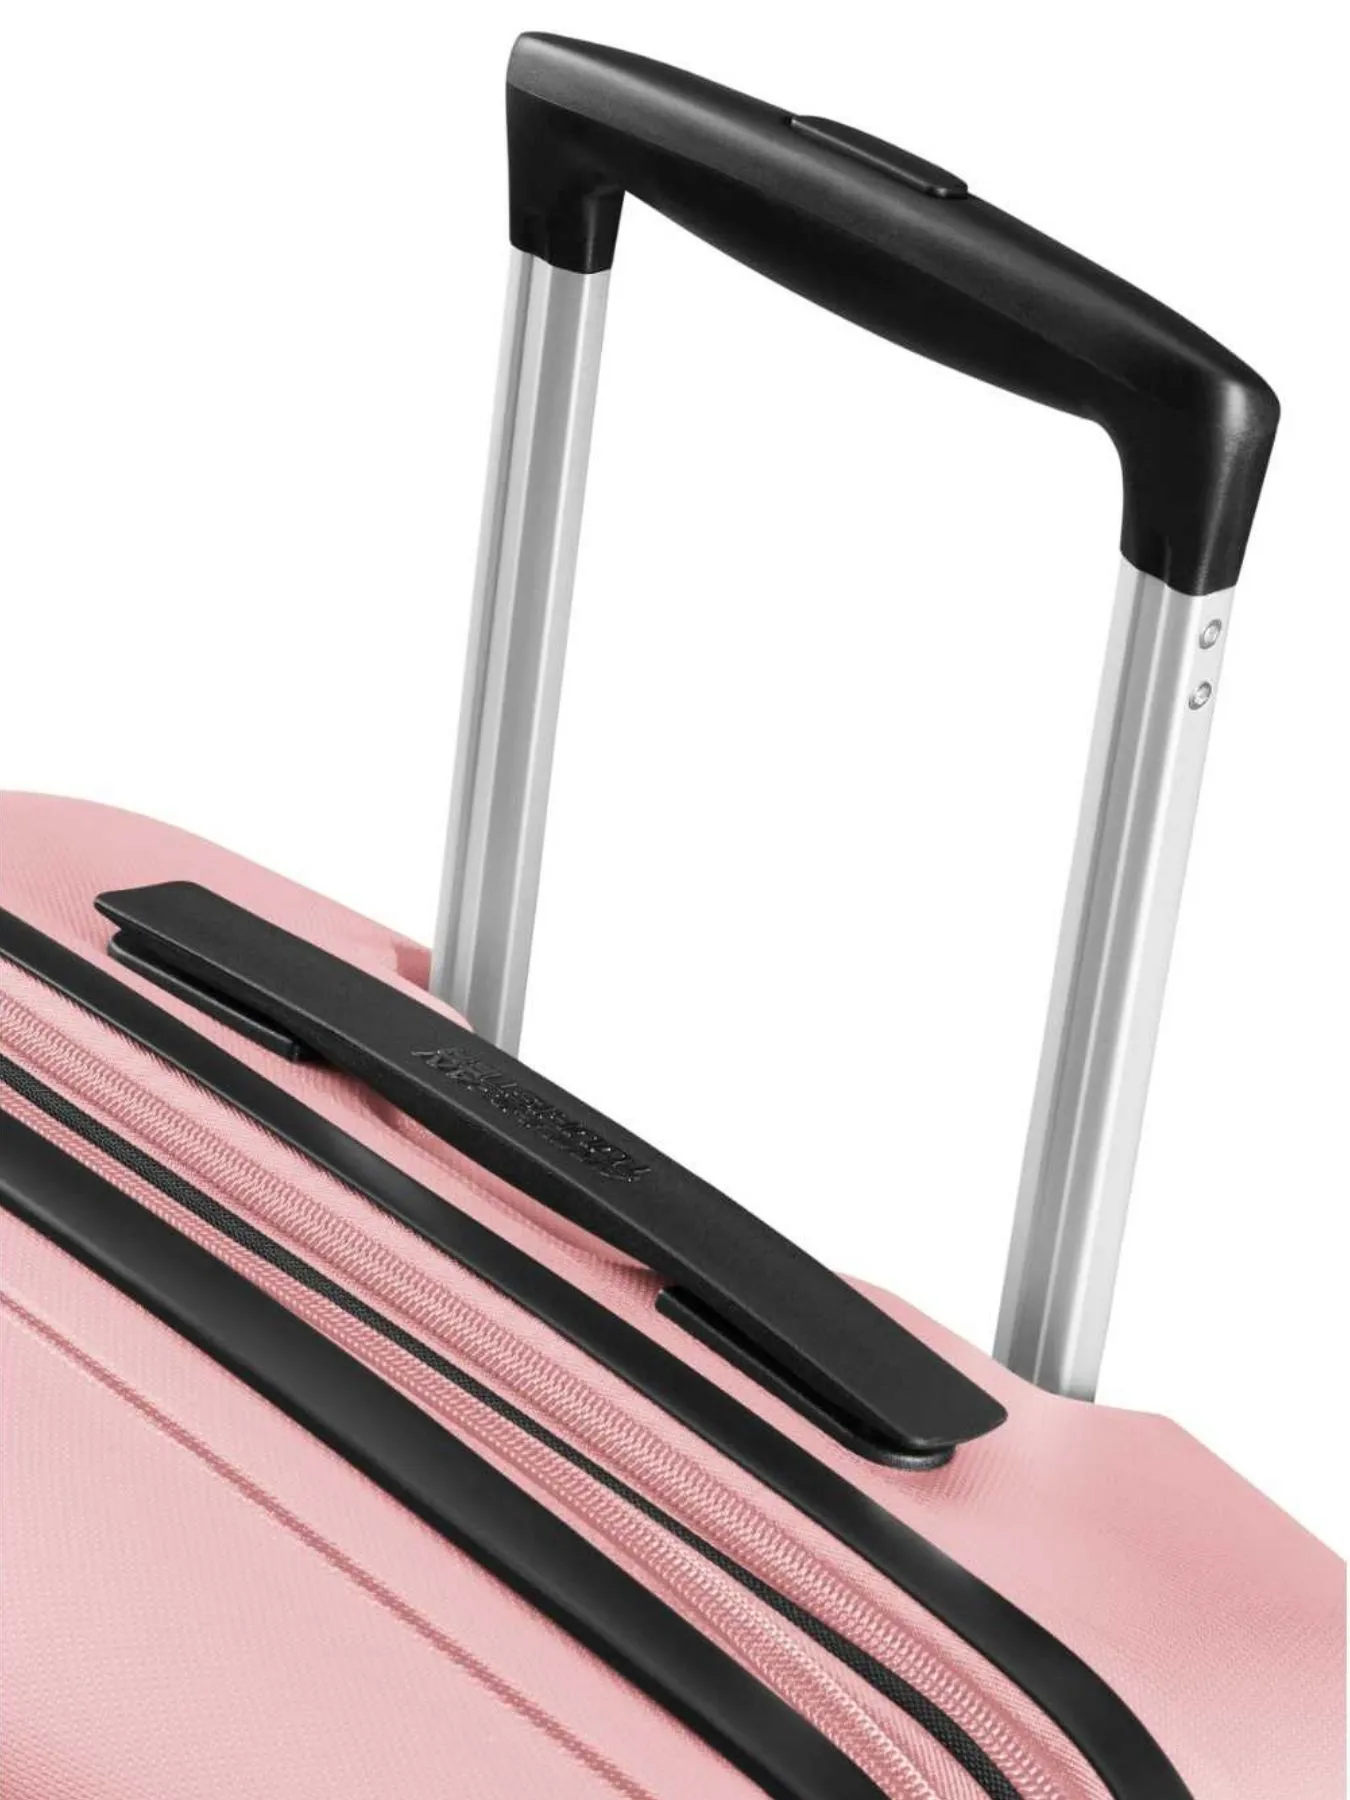 AMERICAN TOURISTER Bon Air DLX Srednji roze kofer 